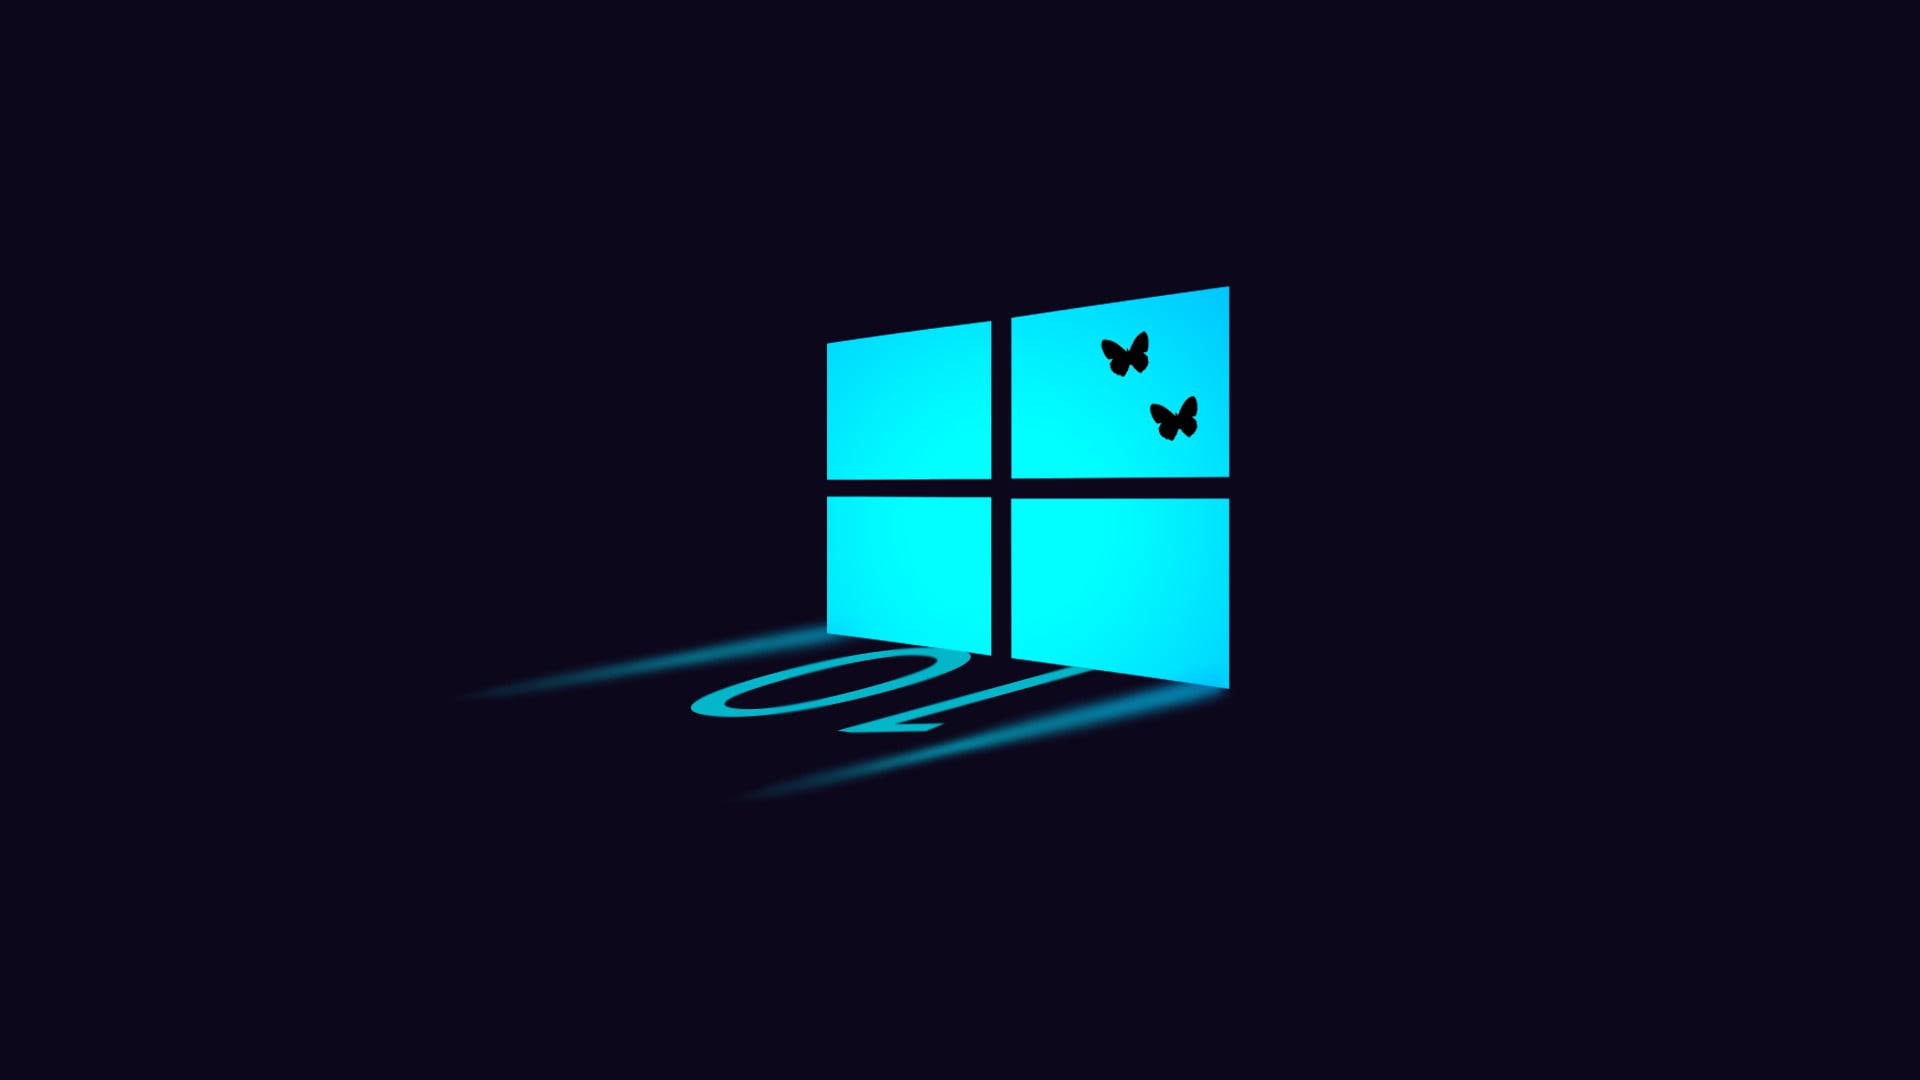 Dark Windows 10 Logo With Butterflies